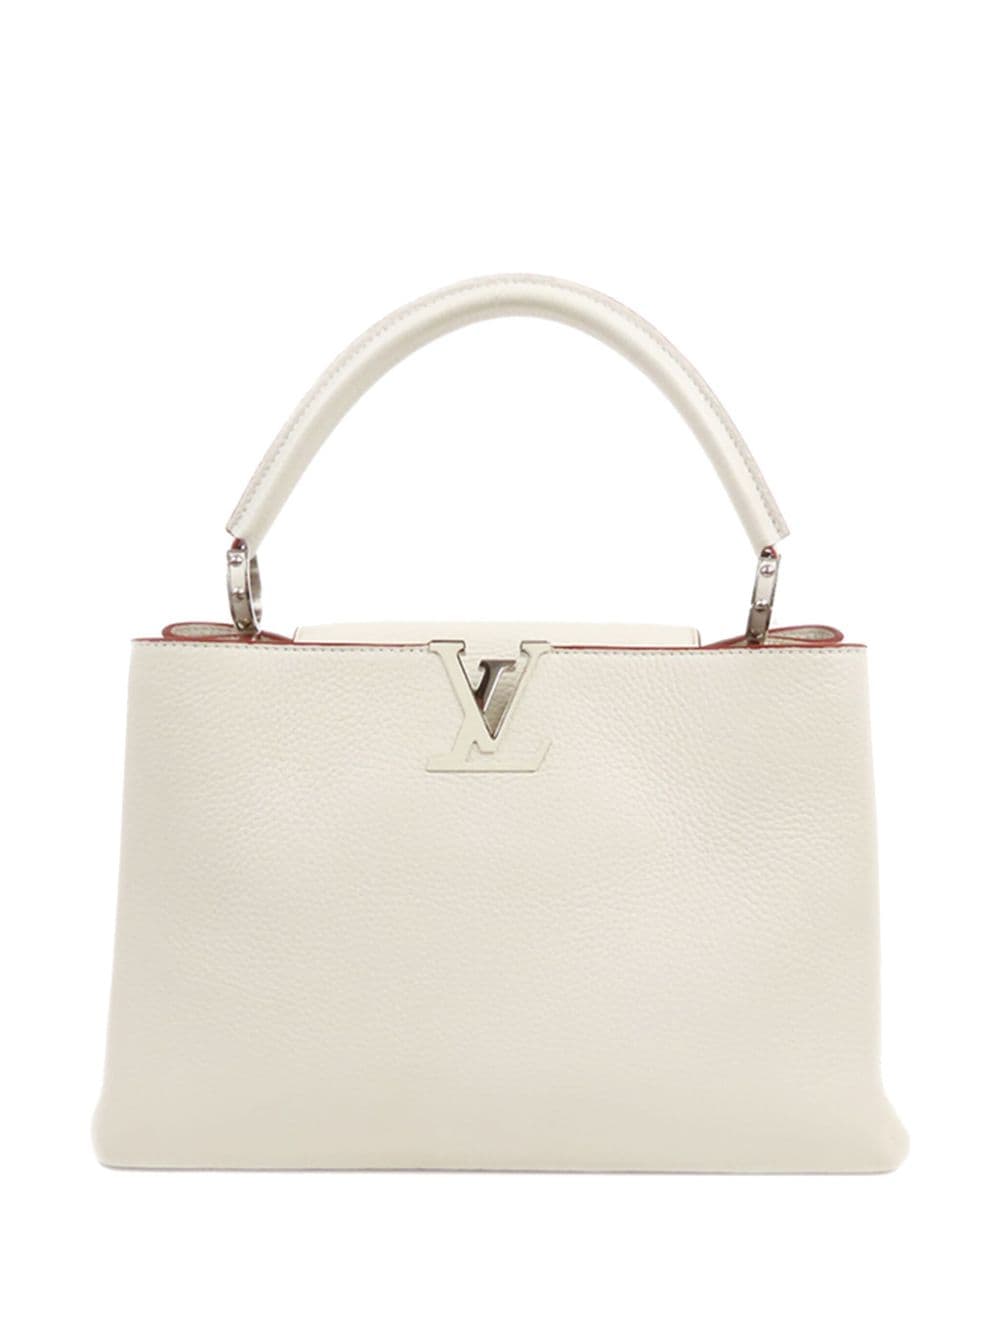 Louis Vuitton Pre-Owned 2013 Capucines MM handbag - Toni neutri